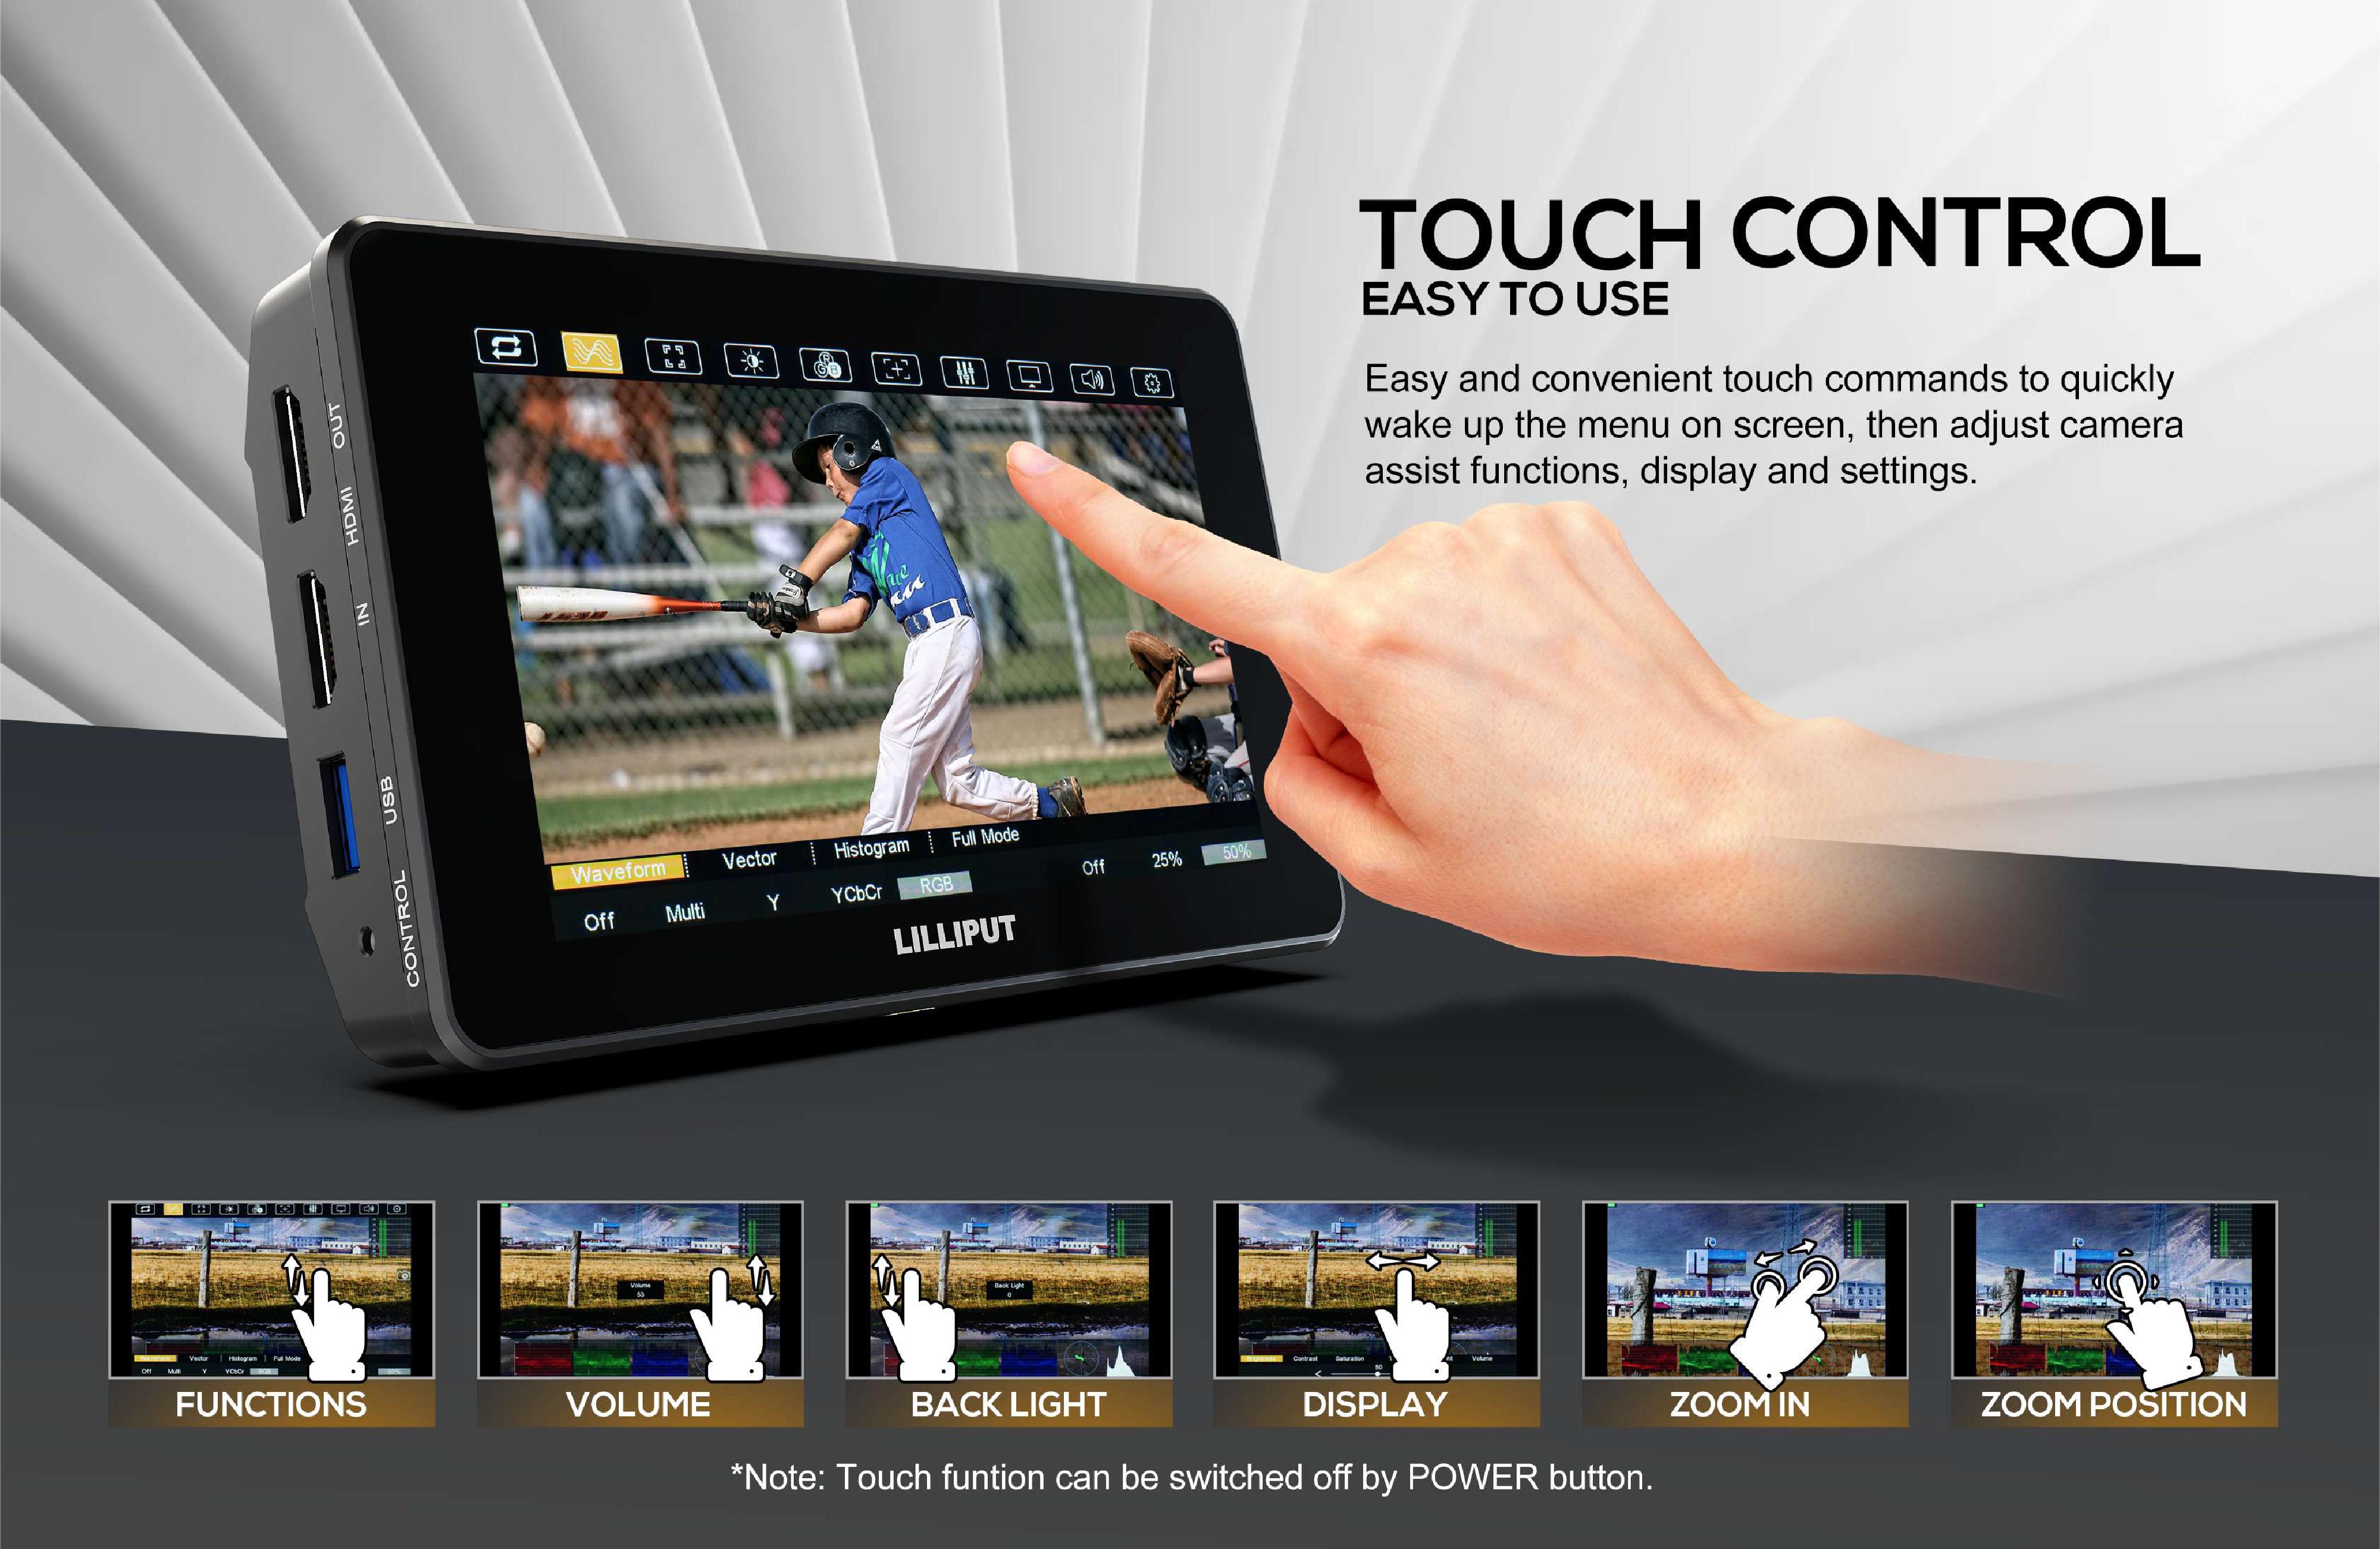 Advanced Touchscreen Control